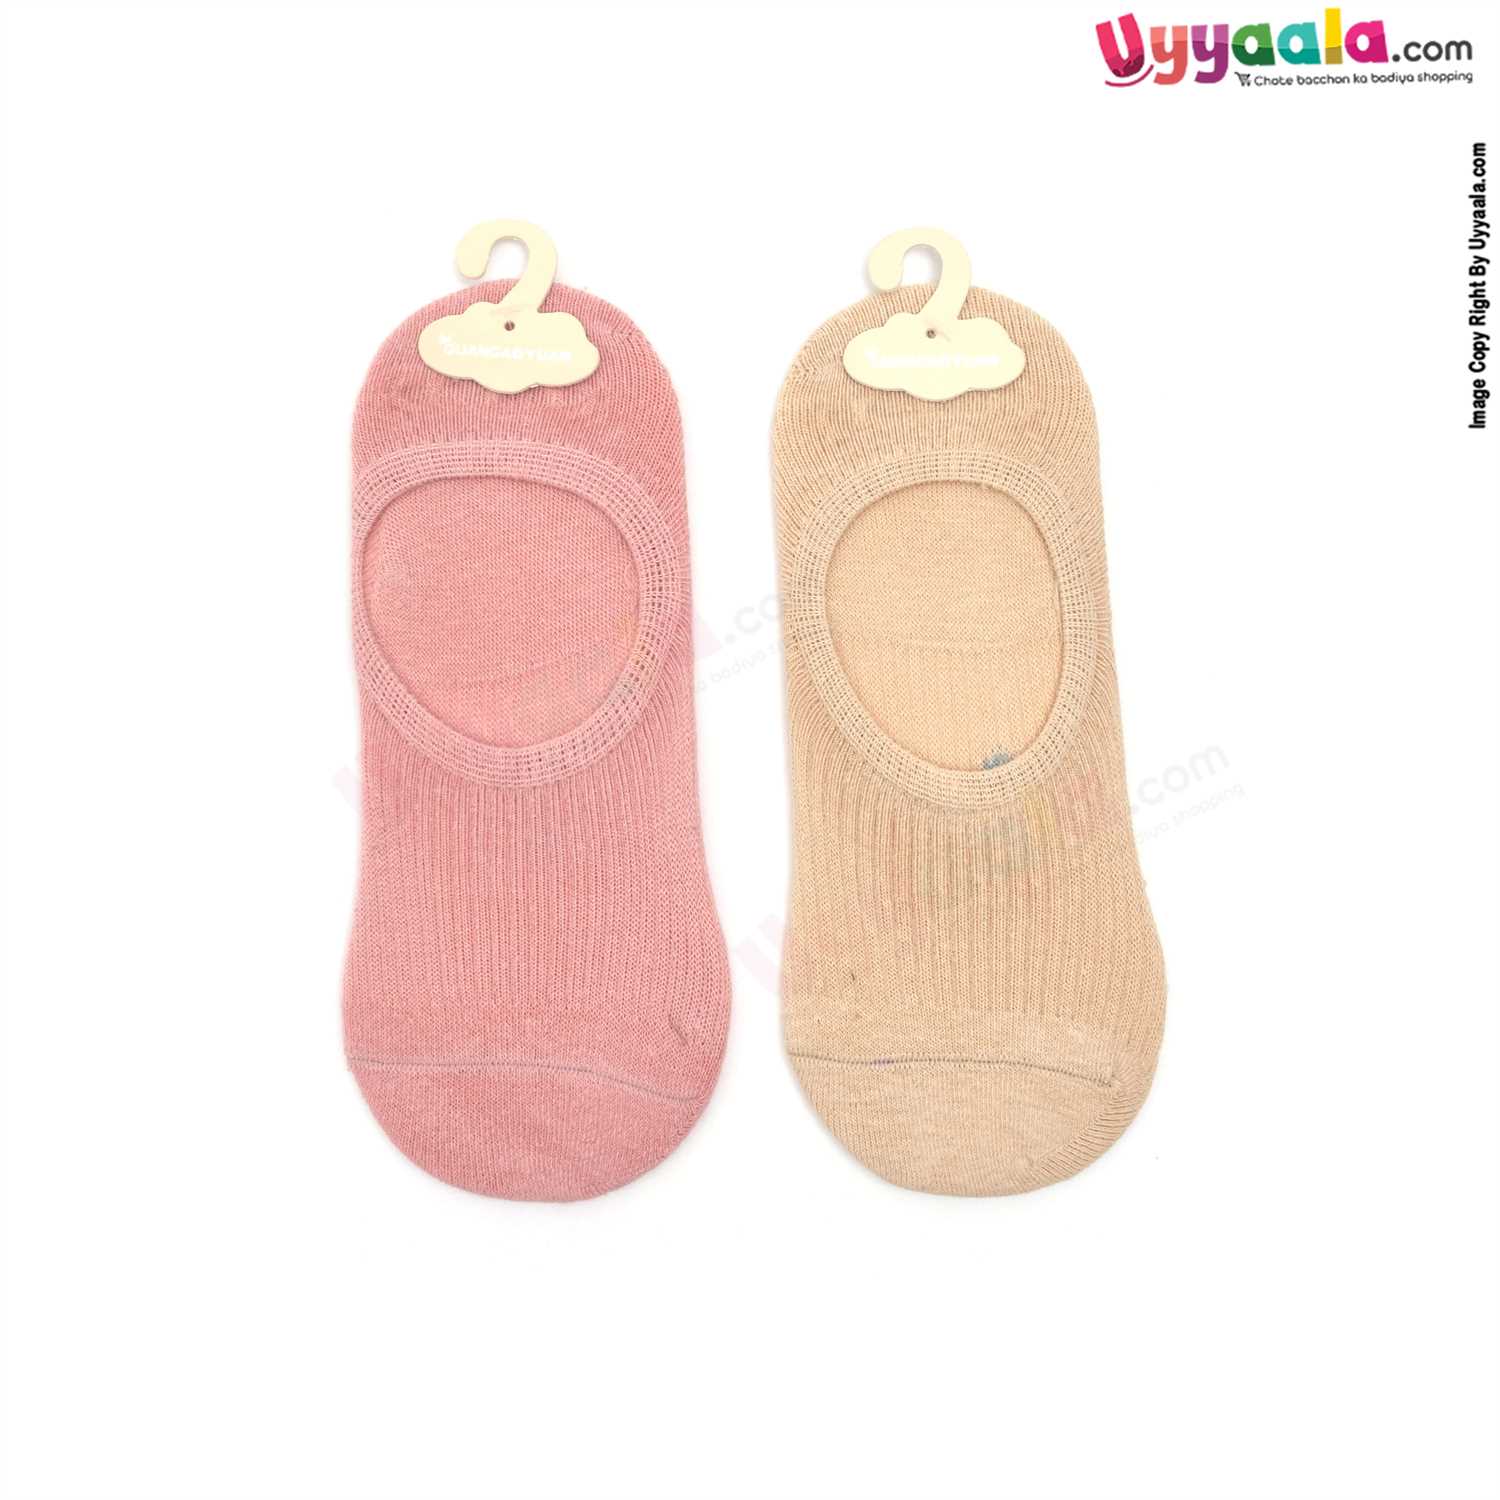 Hosiery Cotton Socks Low Cut Model Pack of 2, 4-8Y Age - Peach & Light Pink